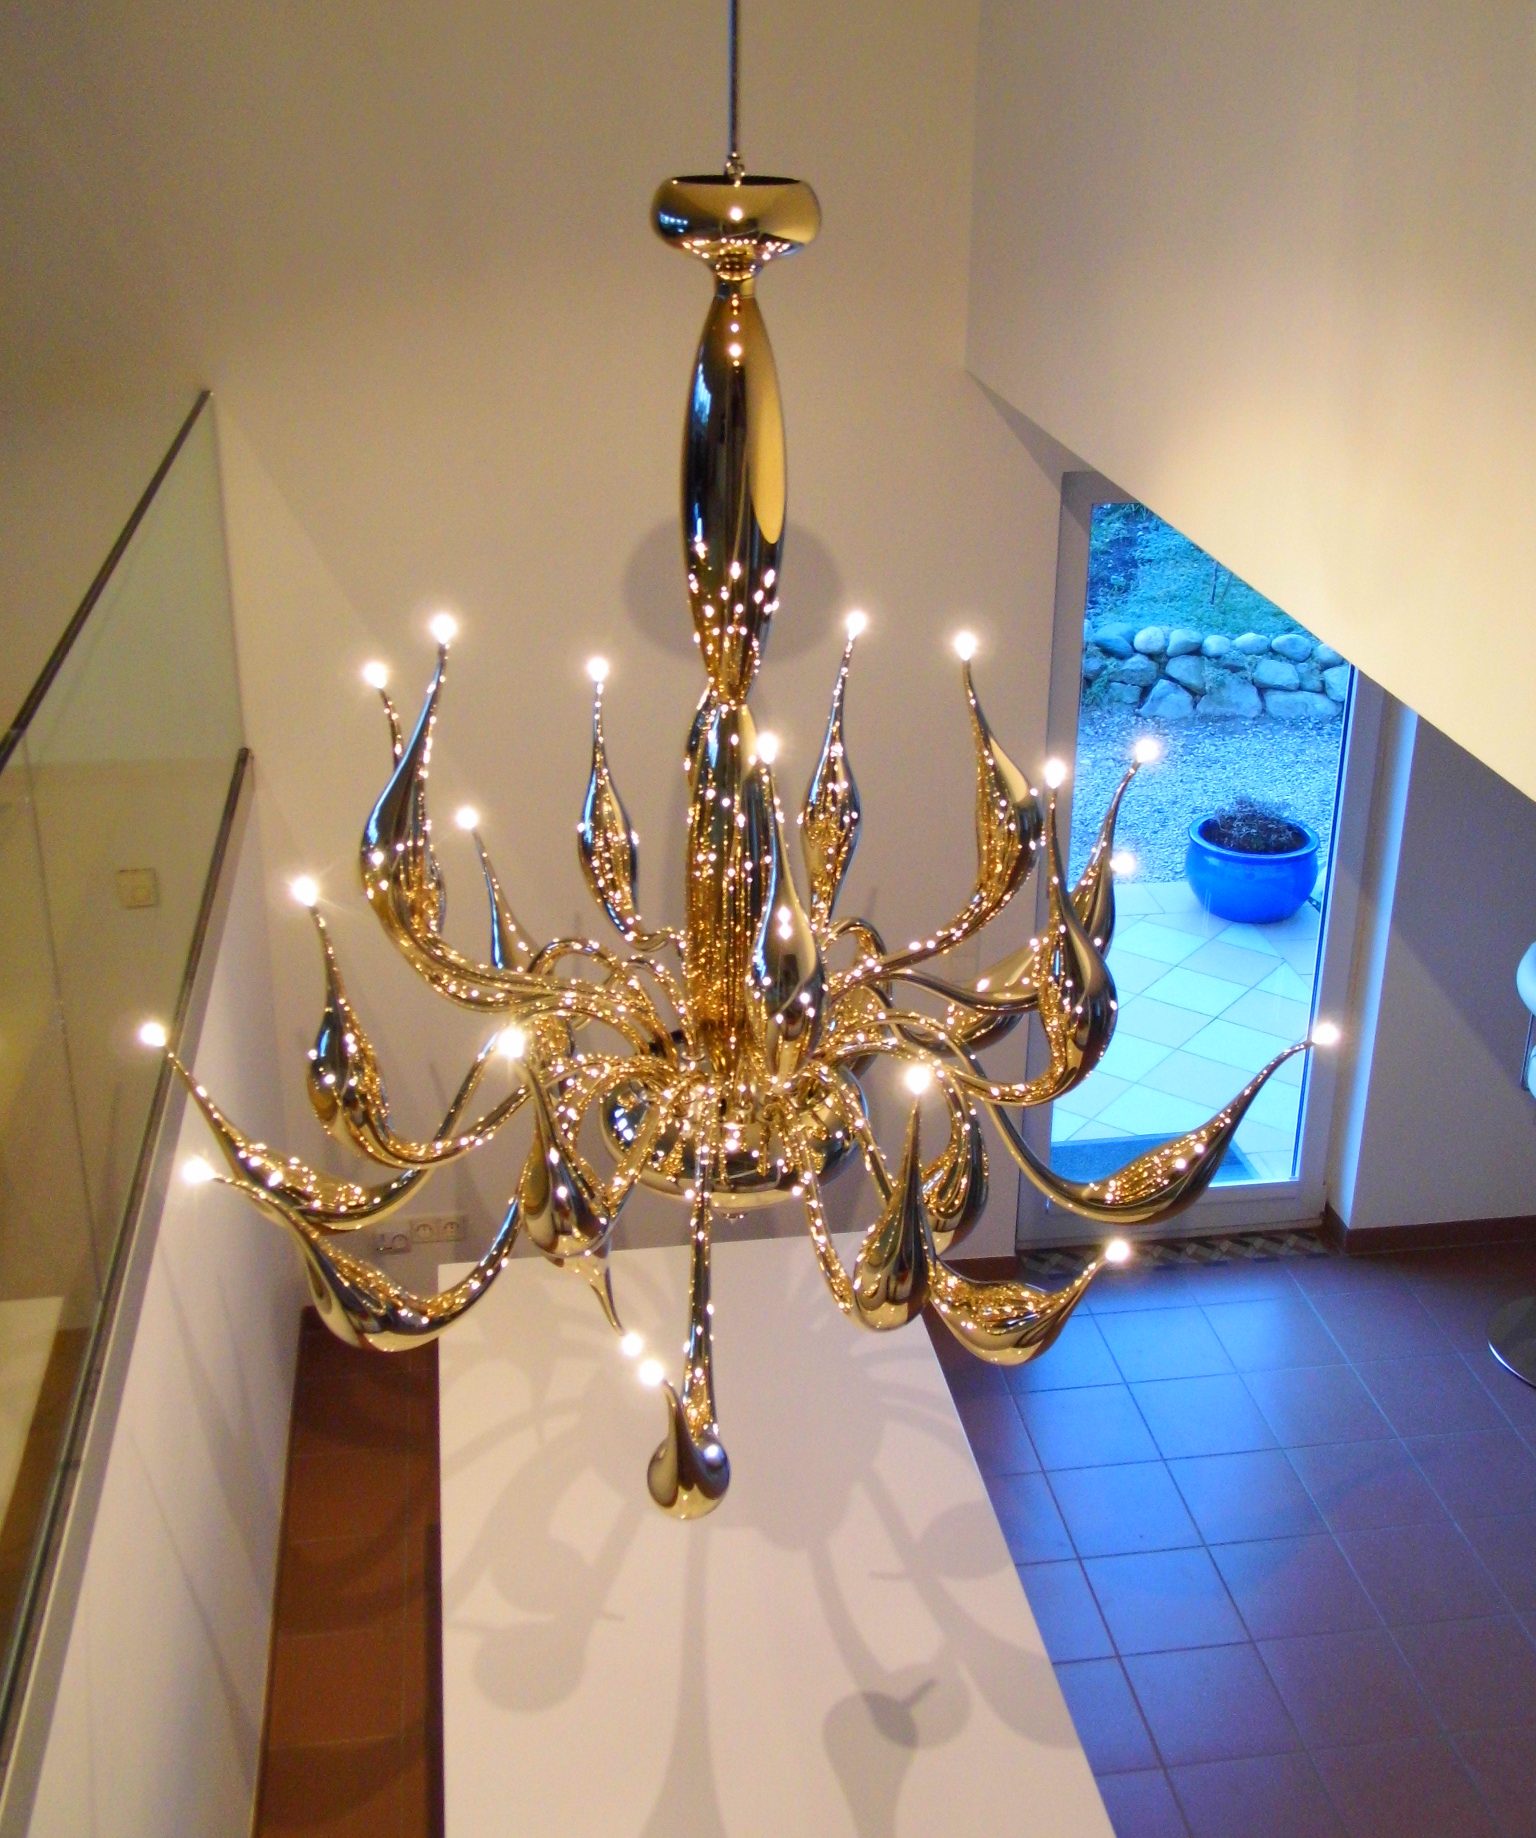 golden chandelier from above